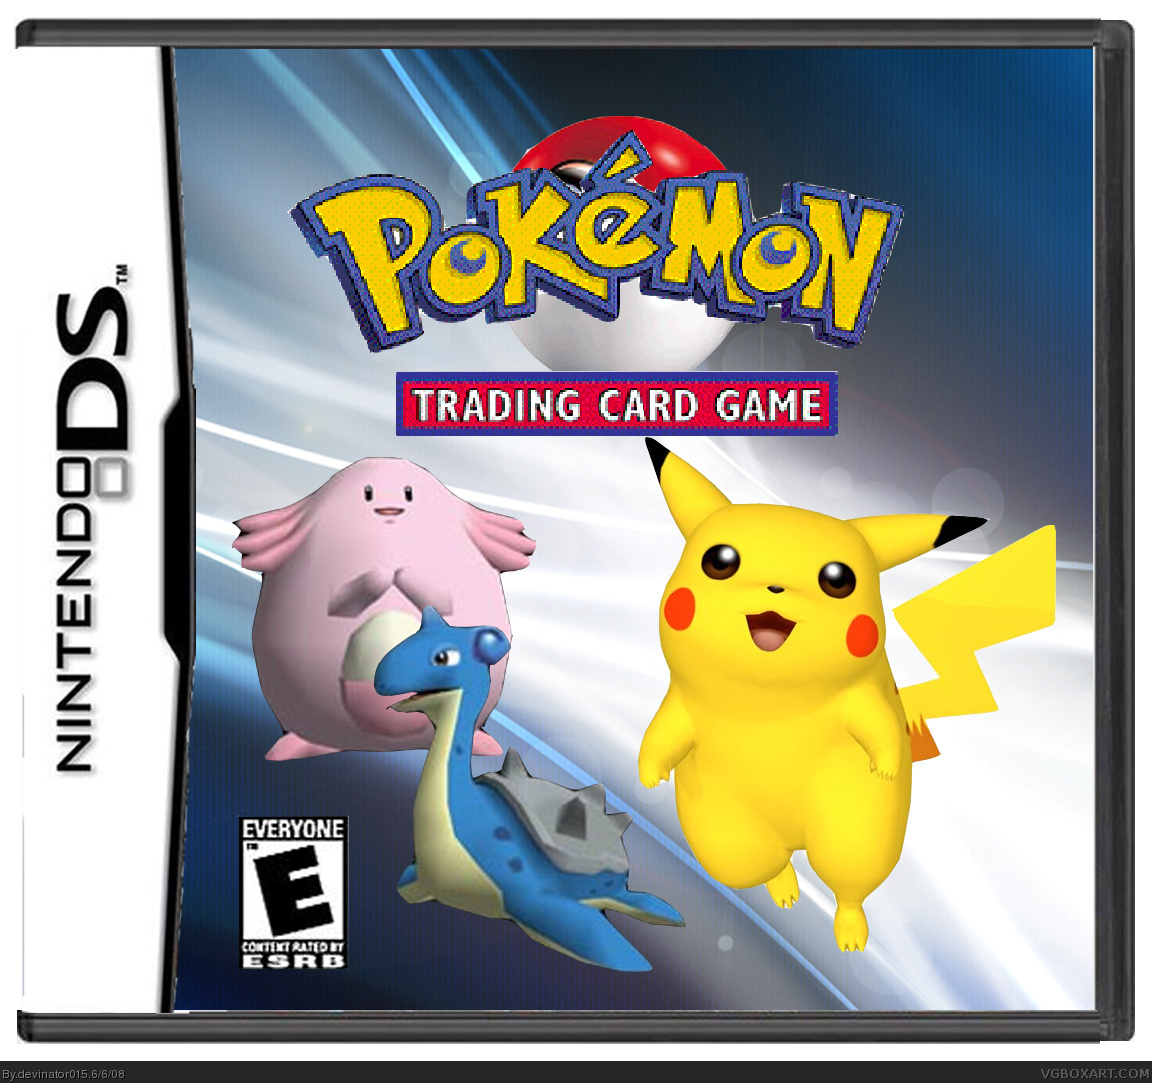 Pokemon Trading Card Game box cover